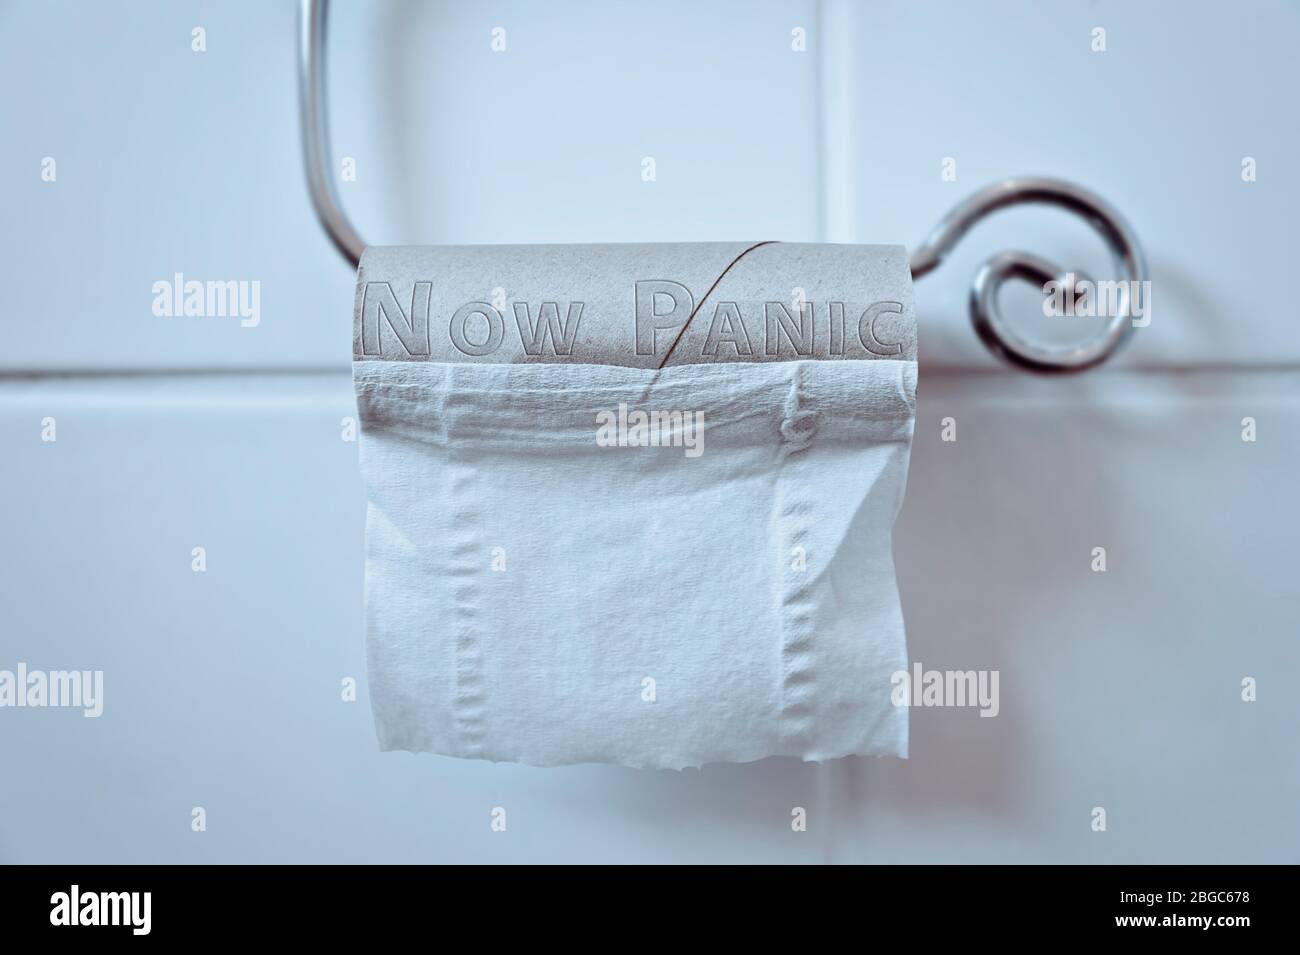 Empty Toilet Loo Roll reads 'NOW PANIC' Panic Buying Toilet Paper concept Coronavirus Covid-19 Pandemic Stock Photo